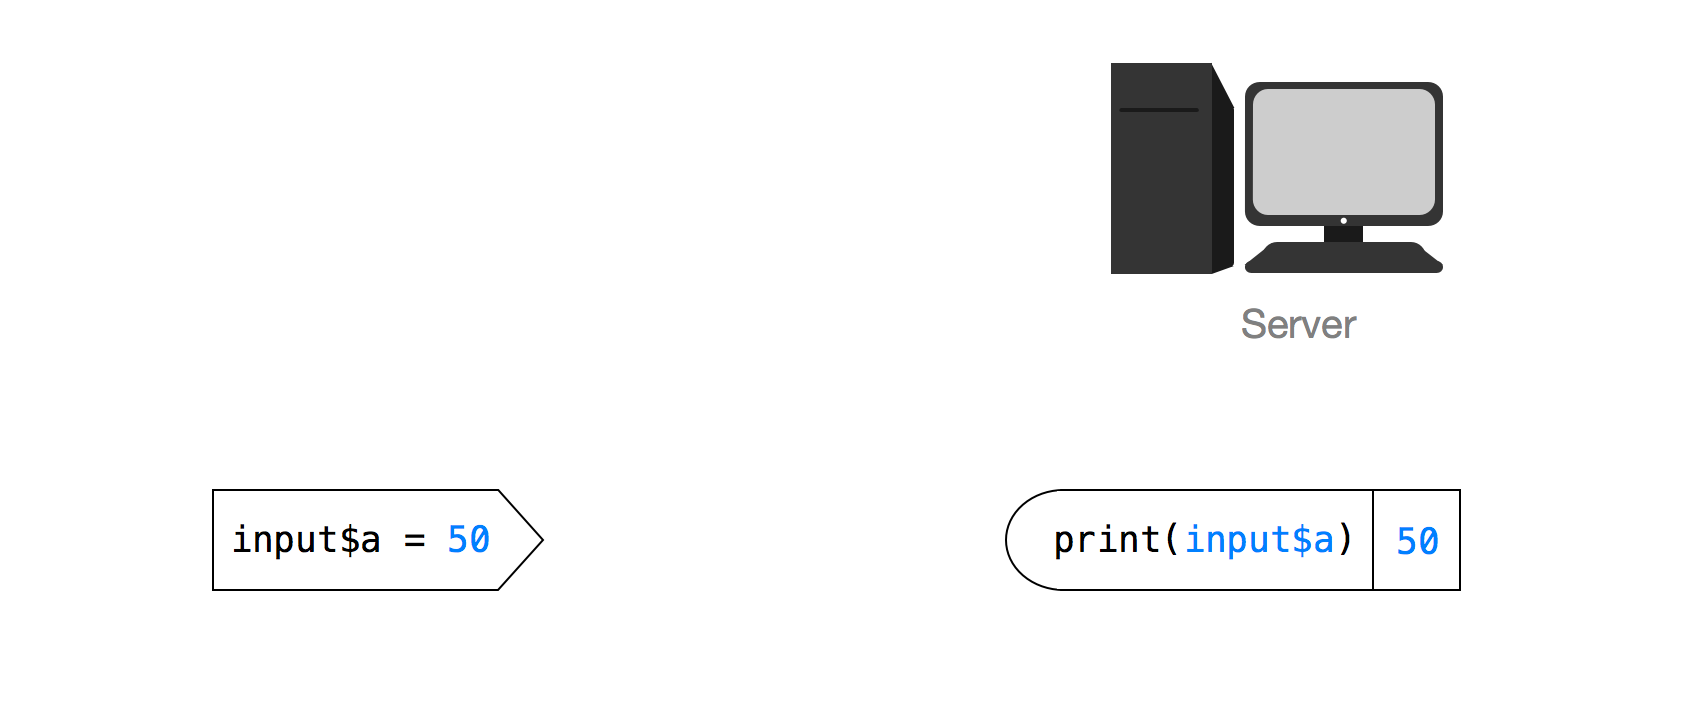 Input value input$a = 50. Output value print(input$a) 50 next to image of a server.